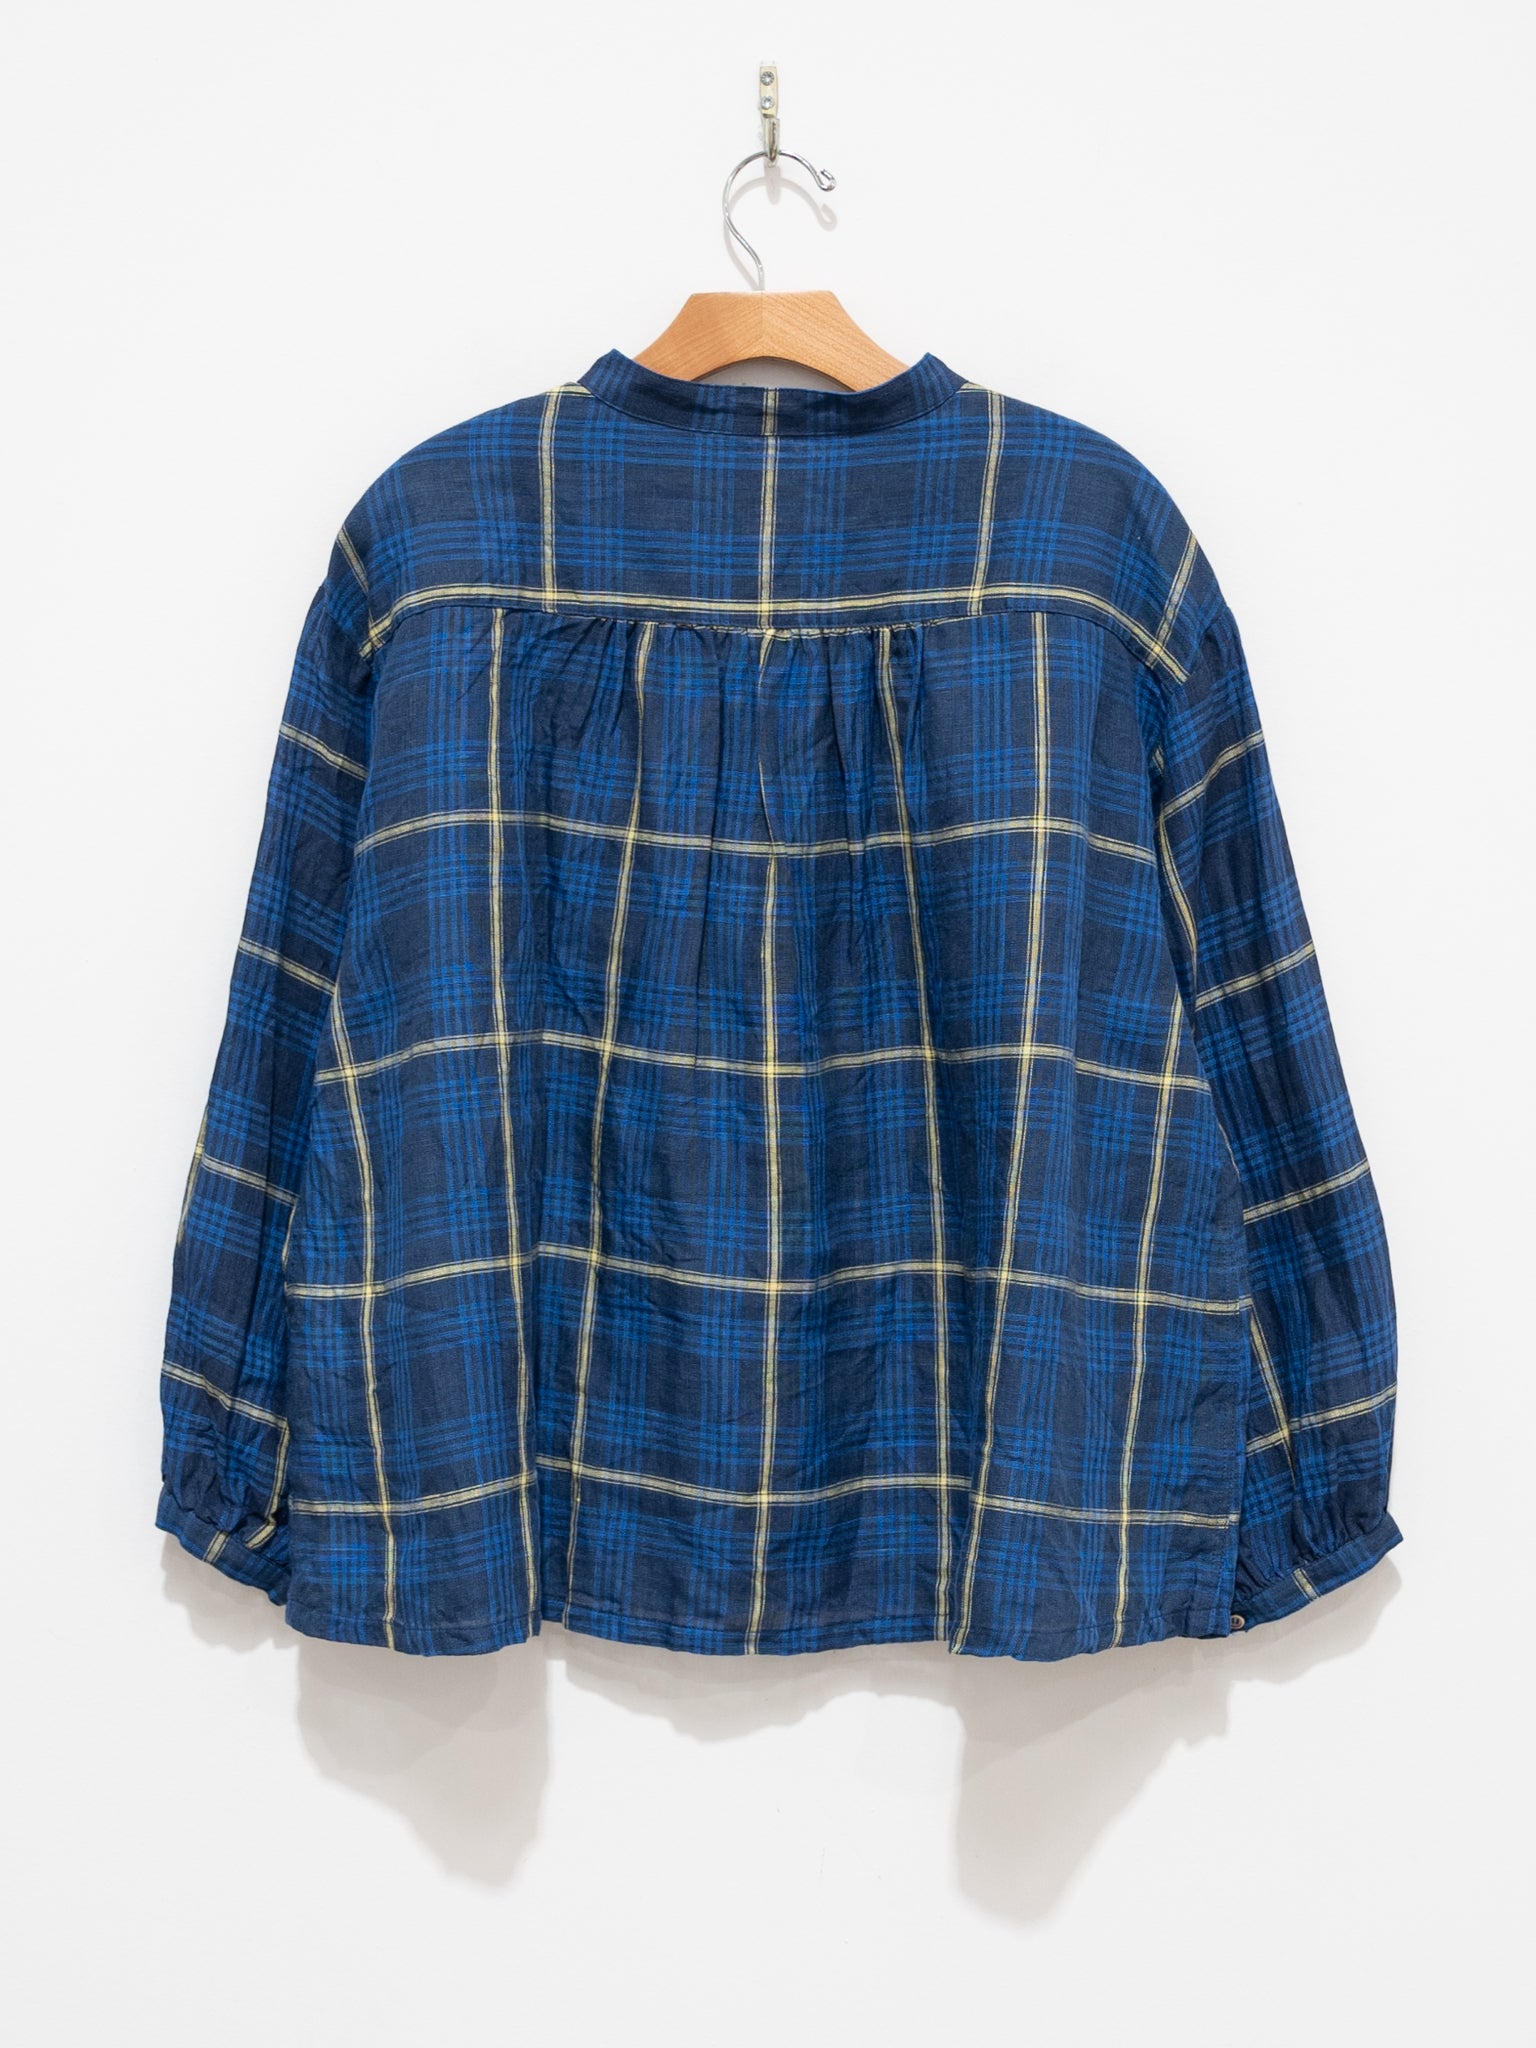 Namu Shop - Ichi Antiquites Linen Check Shirt - Blue